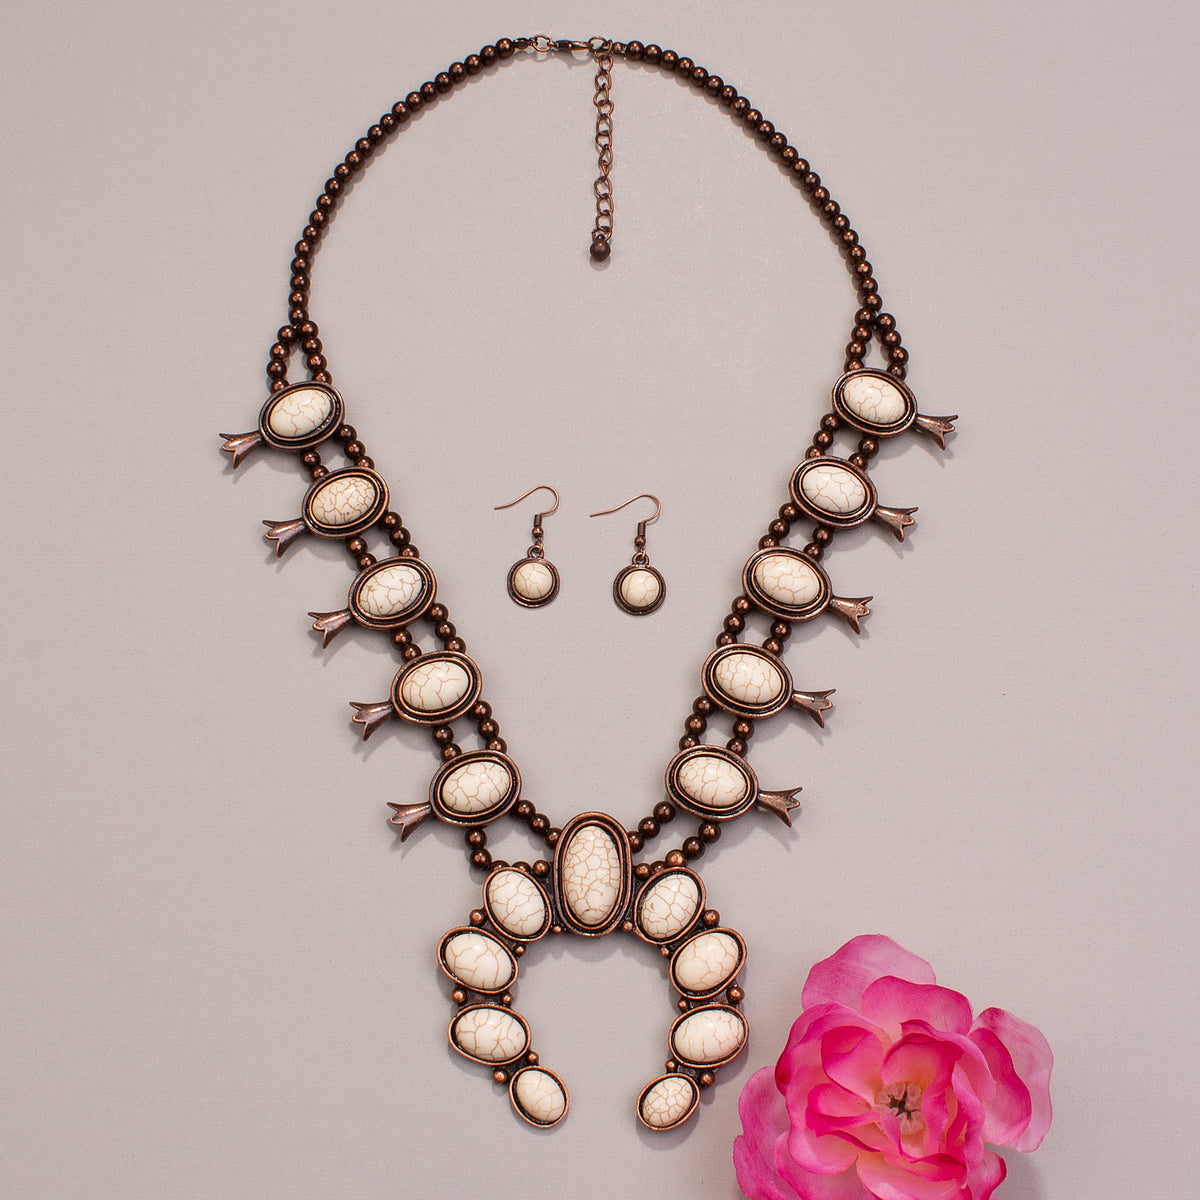 72471 - Squash Blossom Necklace - Fashion Jewelry Wholesale